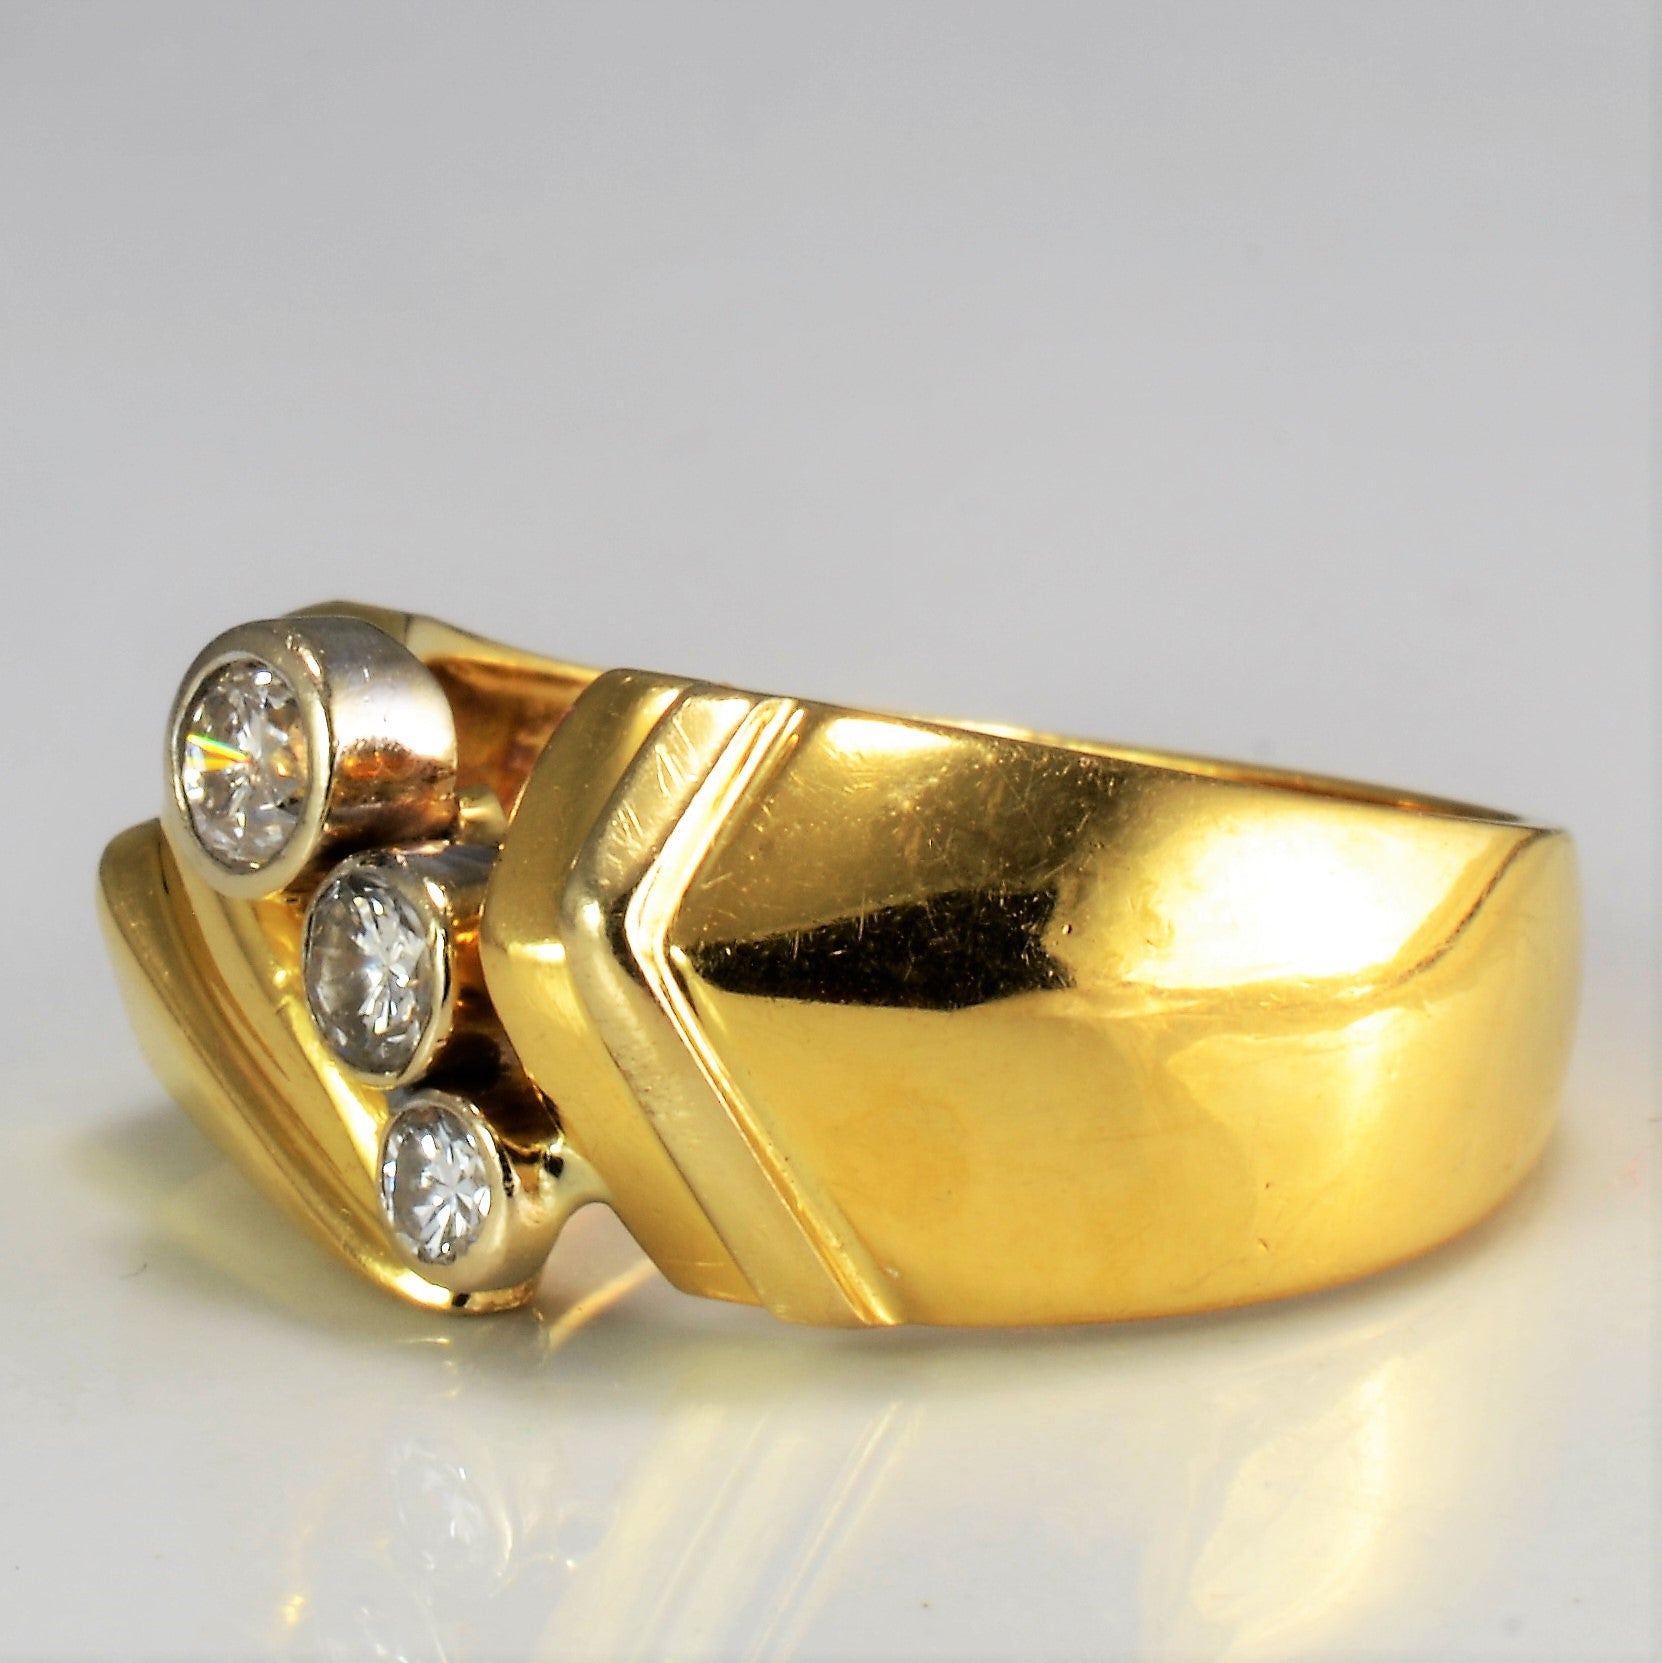 Bezel Set Three Stone Diamond Ring | 0.25 ctw, SZ 6.5 |